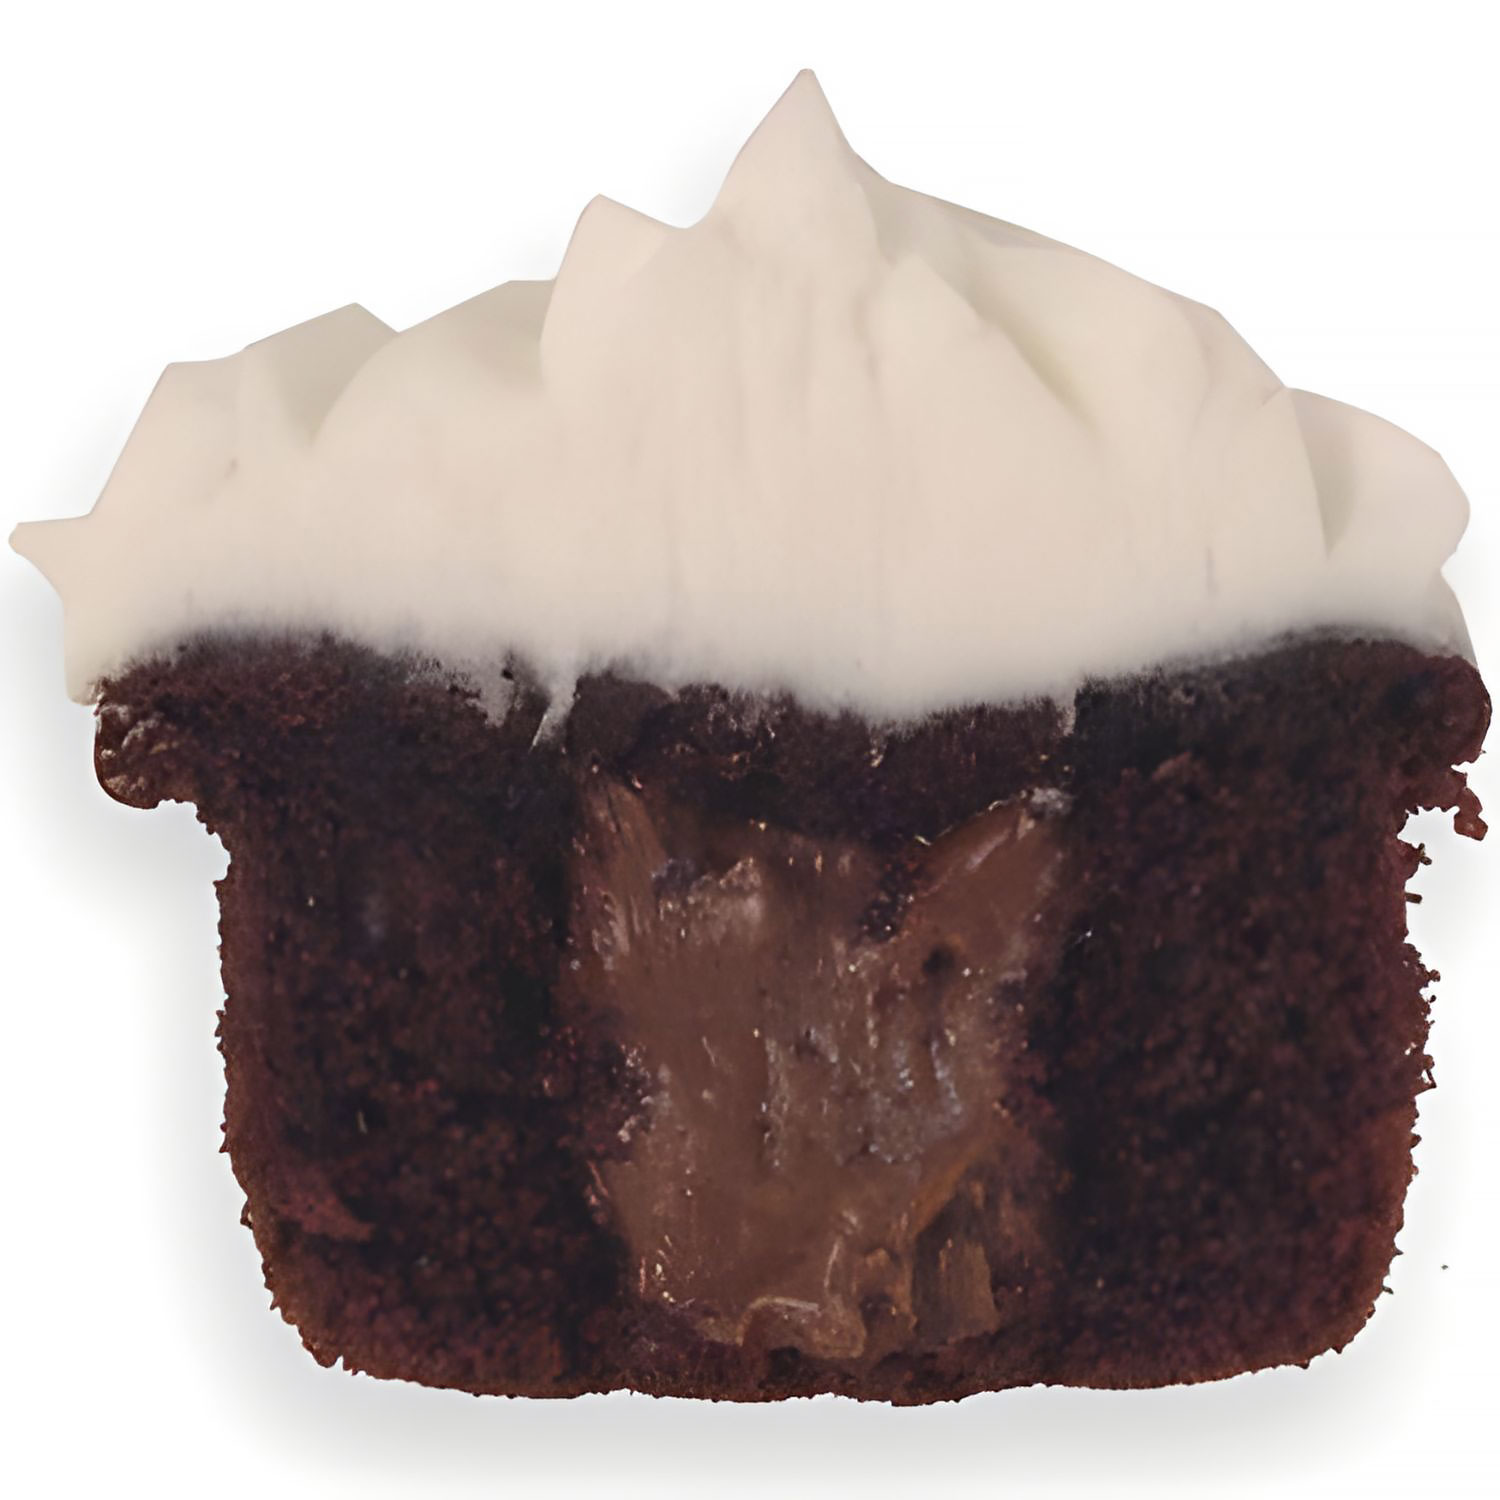 sliced cupcake showing fudge filling in center